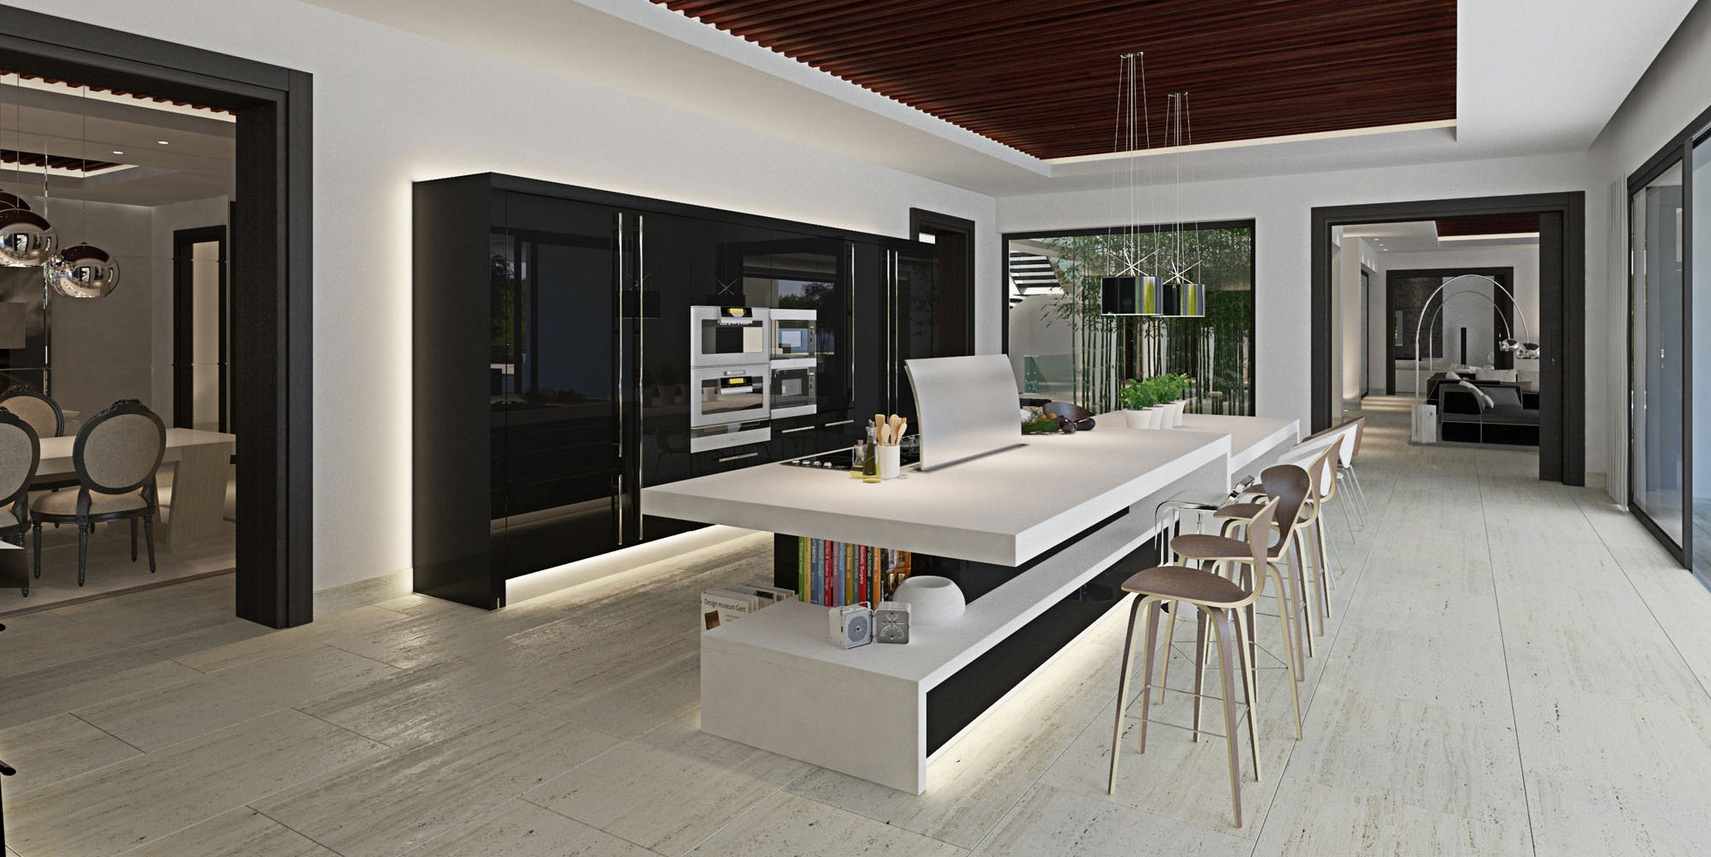 Luxurious 9 Bedroom Spanish Home With Indoor & Outdoor Pools 12